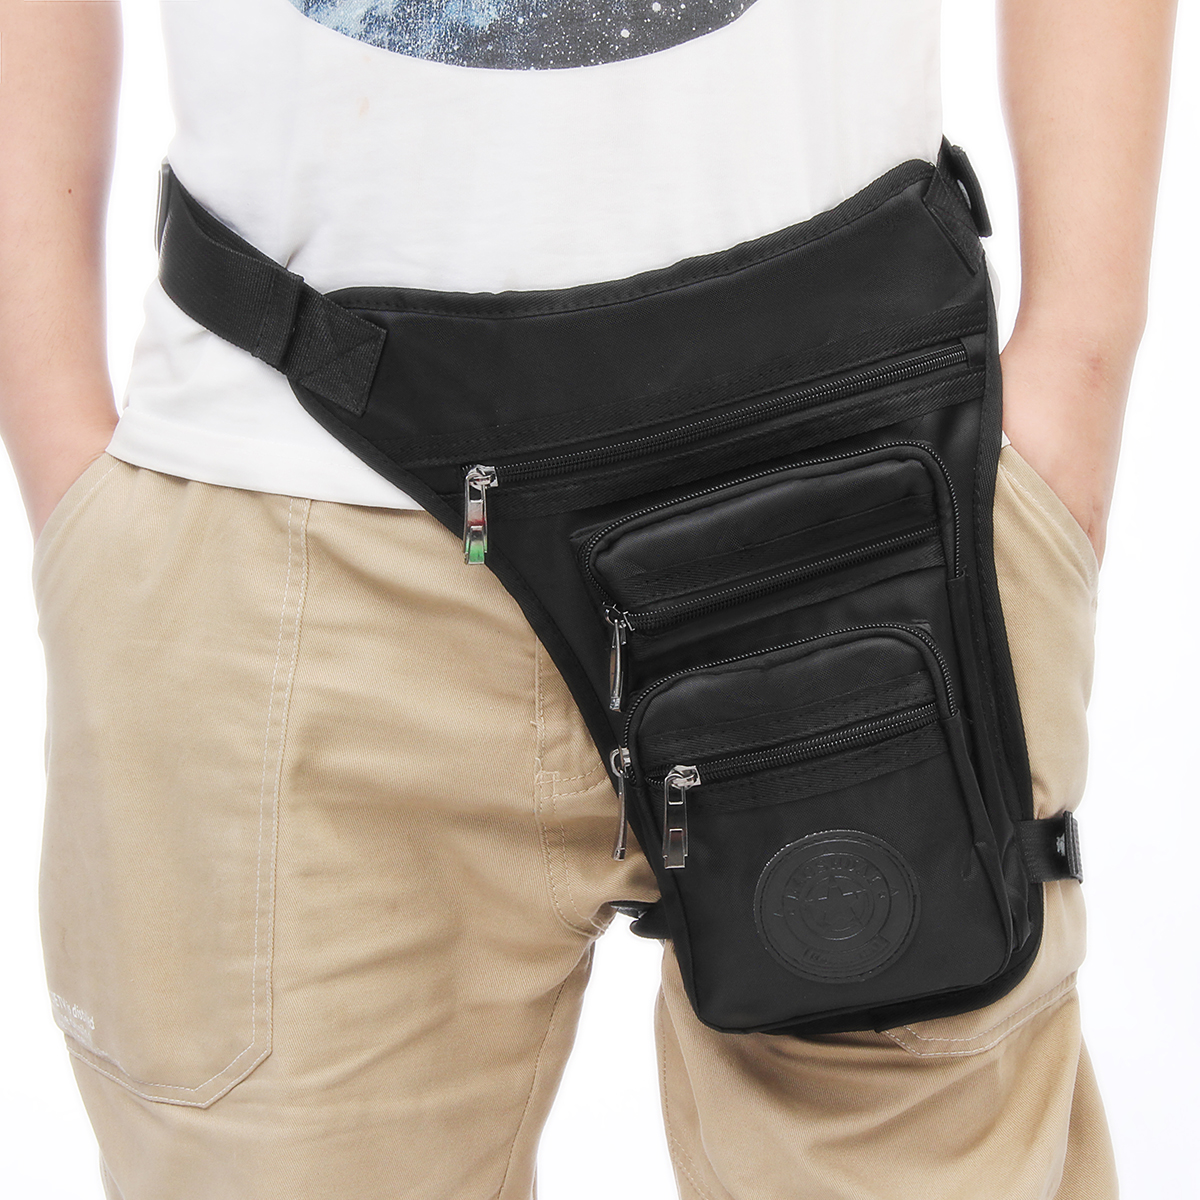 

BIKIGHT Tactical Leg Bag Riding Belt Pack Outdoor Camping Hunting Leg Bag Utility Multi-Purpose Waist Bag